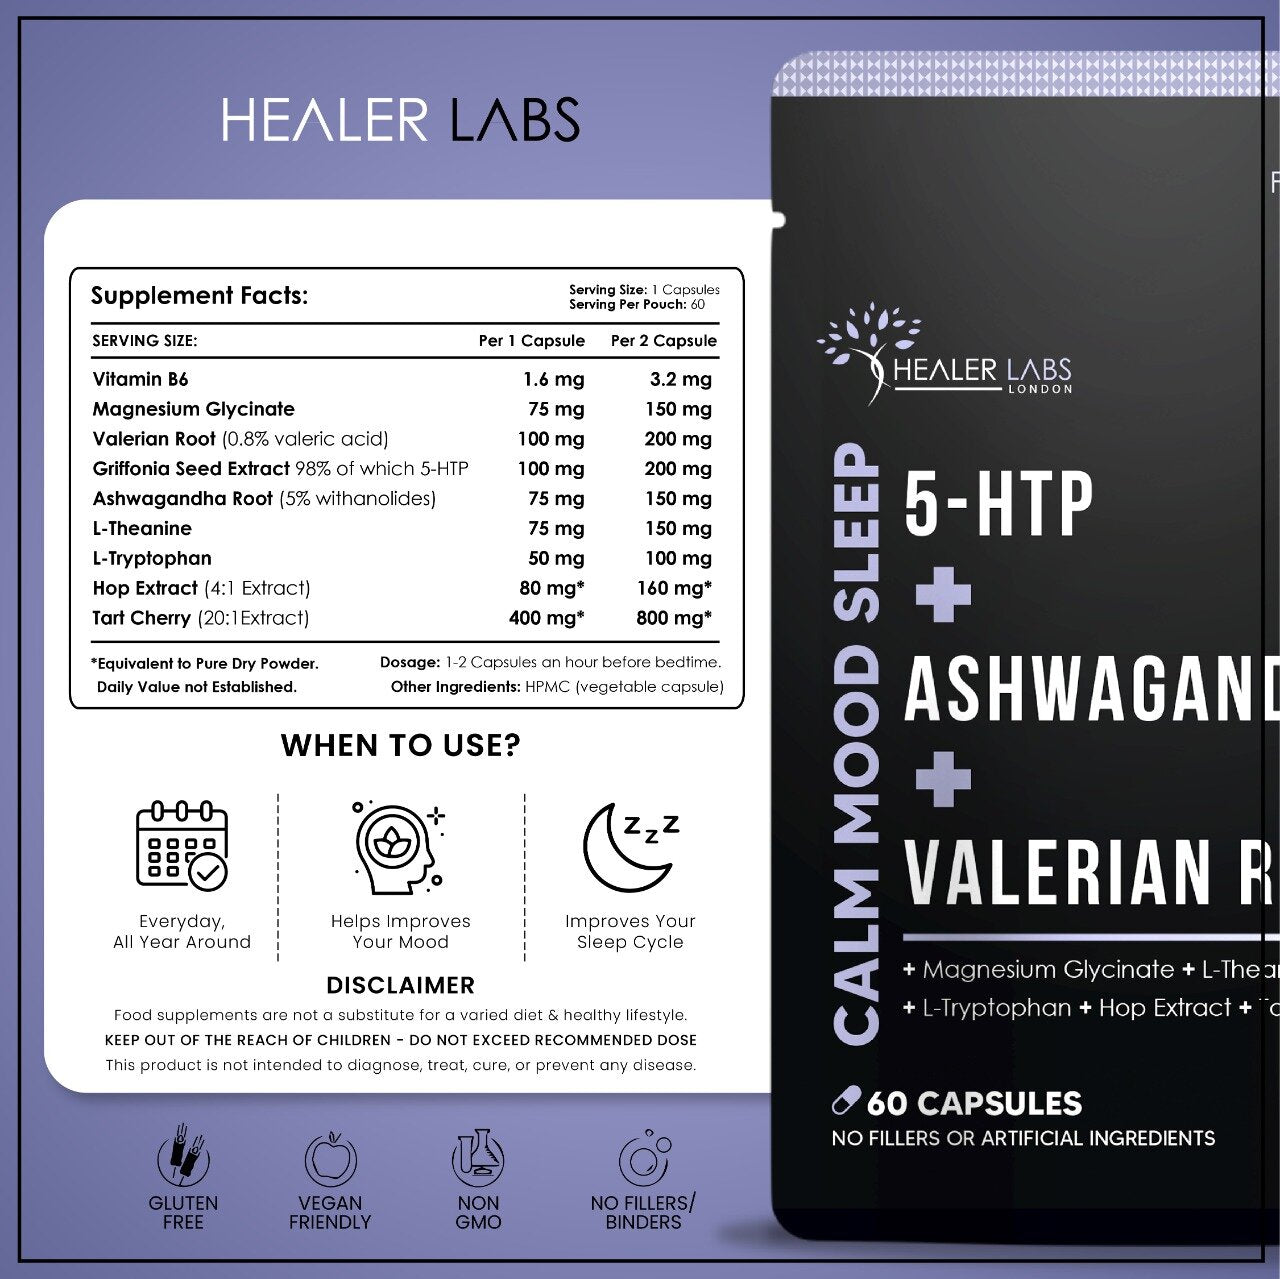  Healer Labs - Natural Sleep+Mood With 5-HTP, Ashwagandha, Valerian - The Beauty Corp.